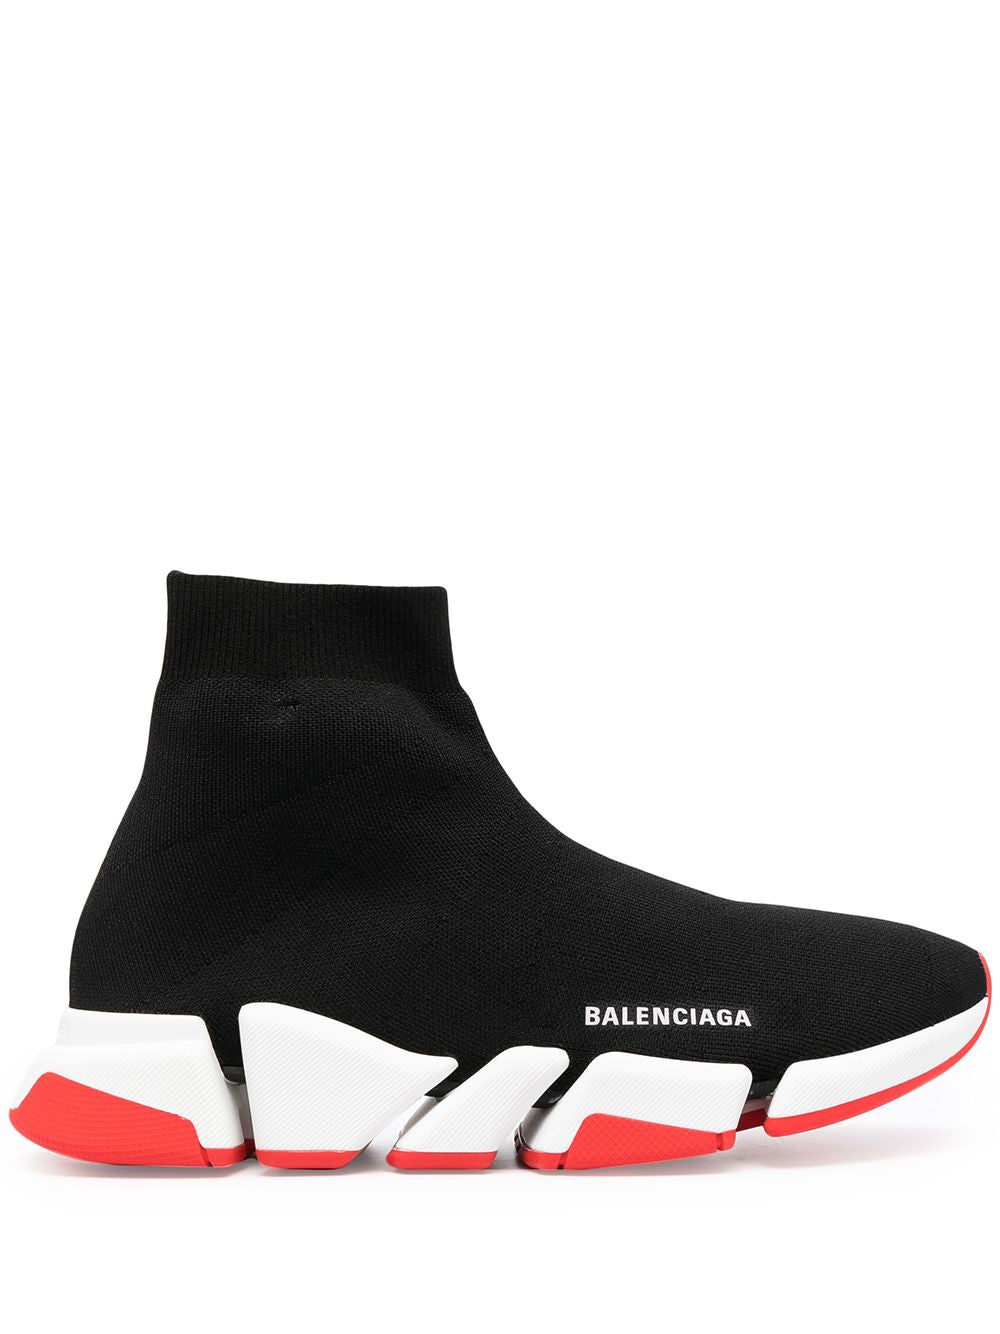 Balenciaga Speed 2.0 Black Red (God Reps)